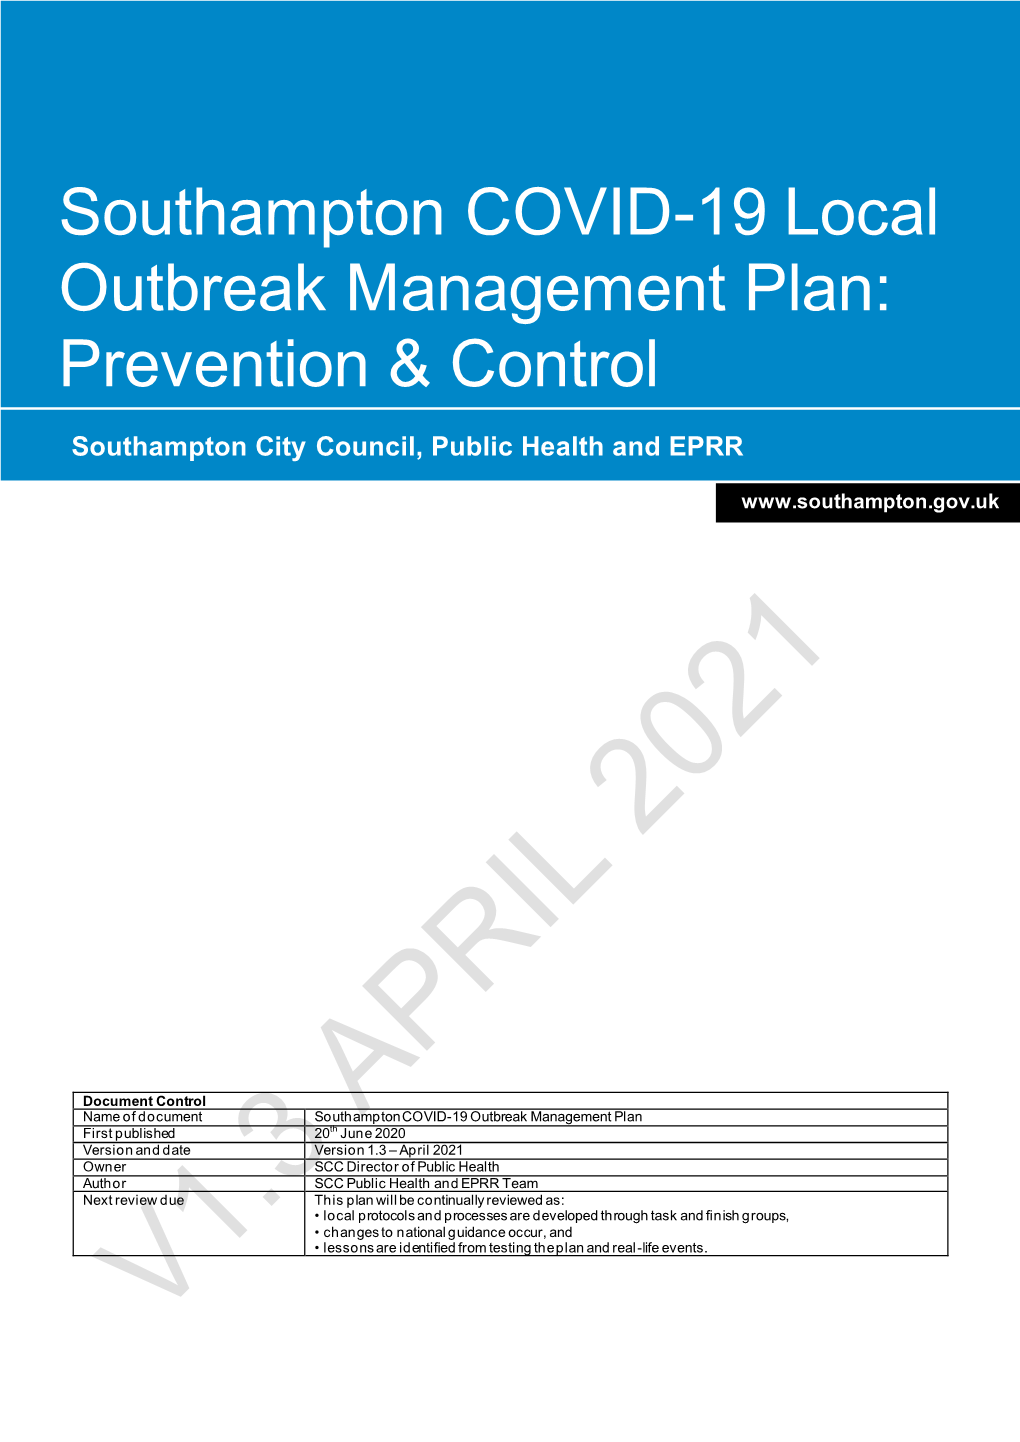 Southampton Covid-19 Outbreak Management Plan